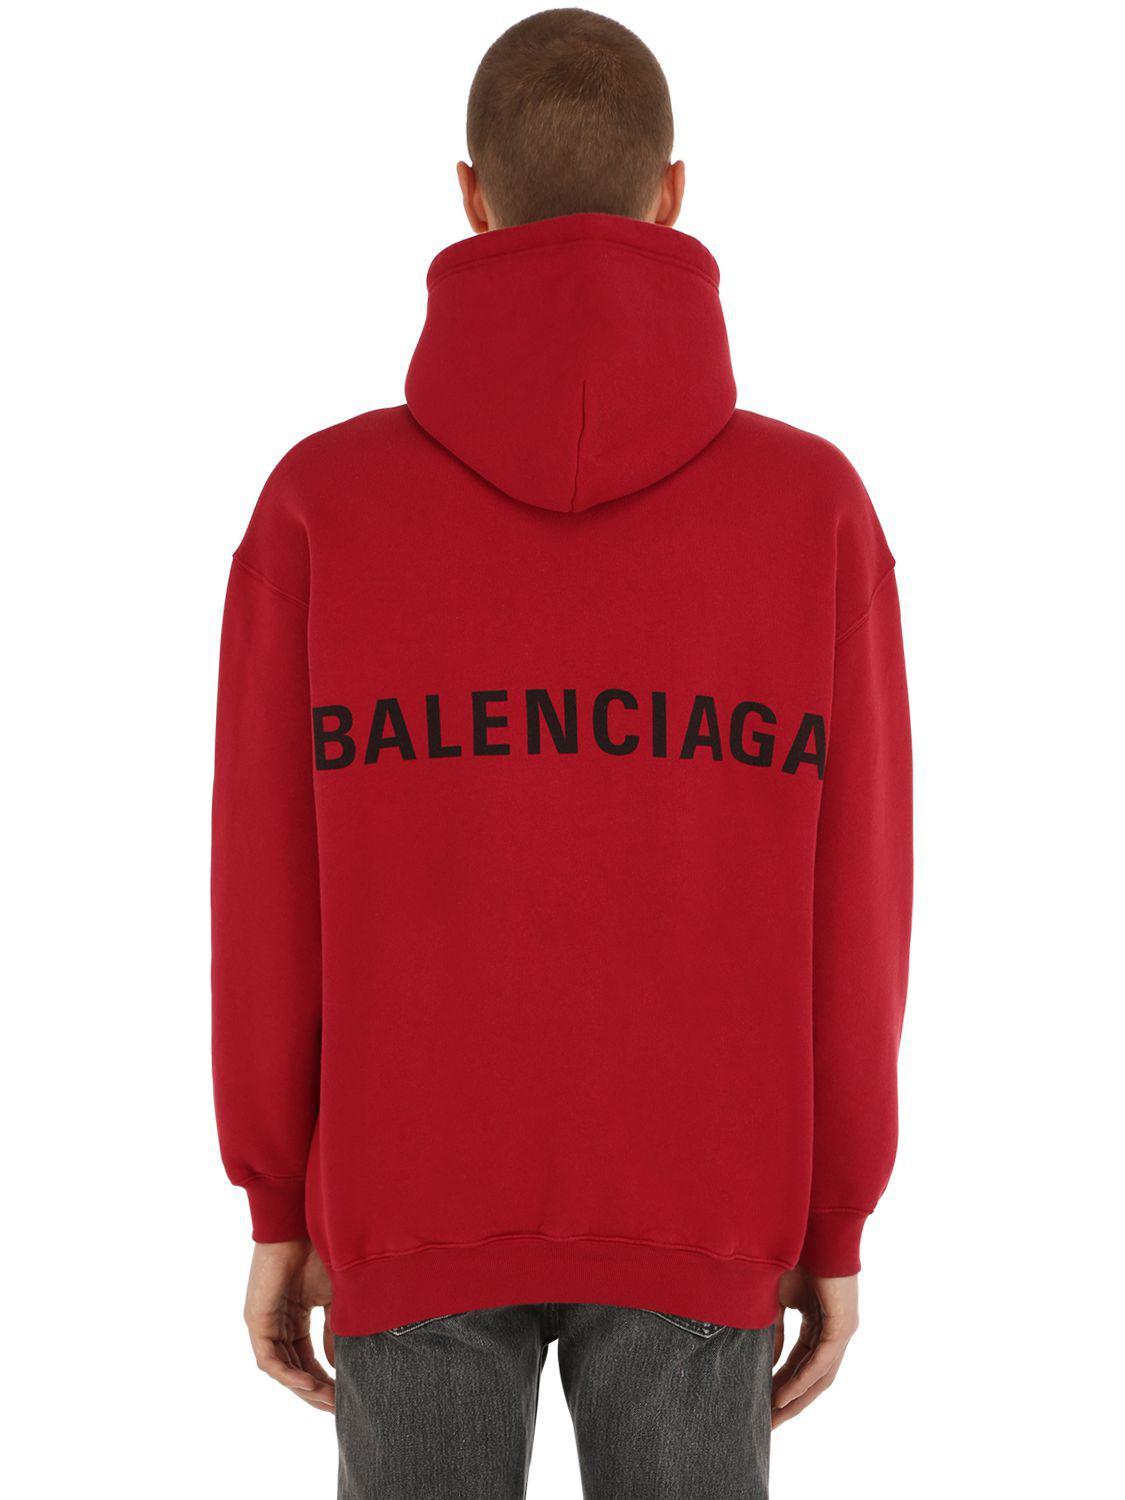 Balenciaga Logo Cotton Sweatshirt Hoodie in Bordeaux (Red) for Men - Lyst